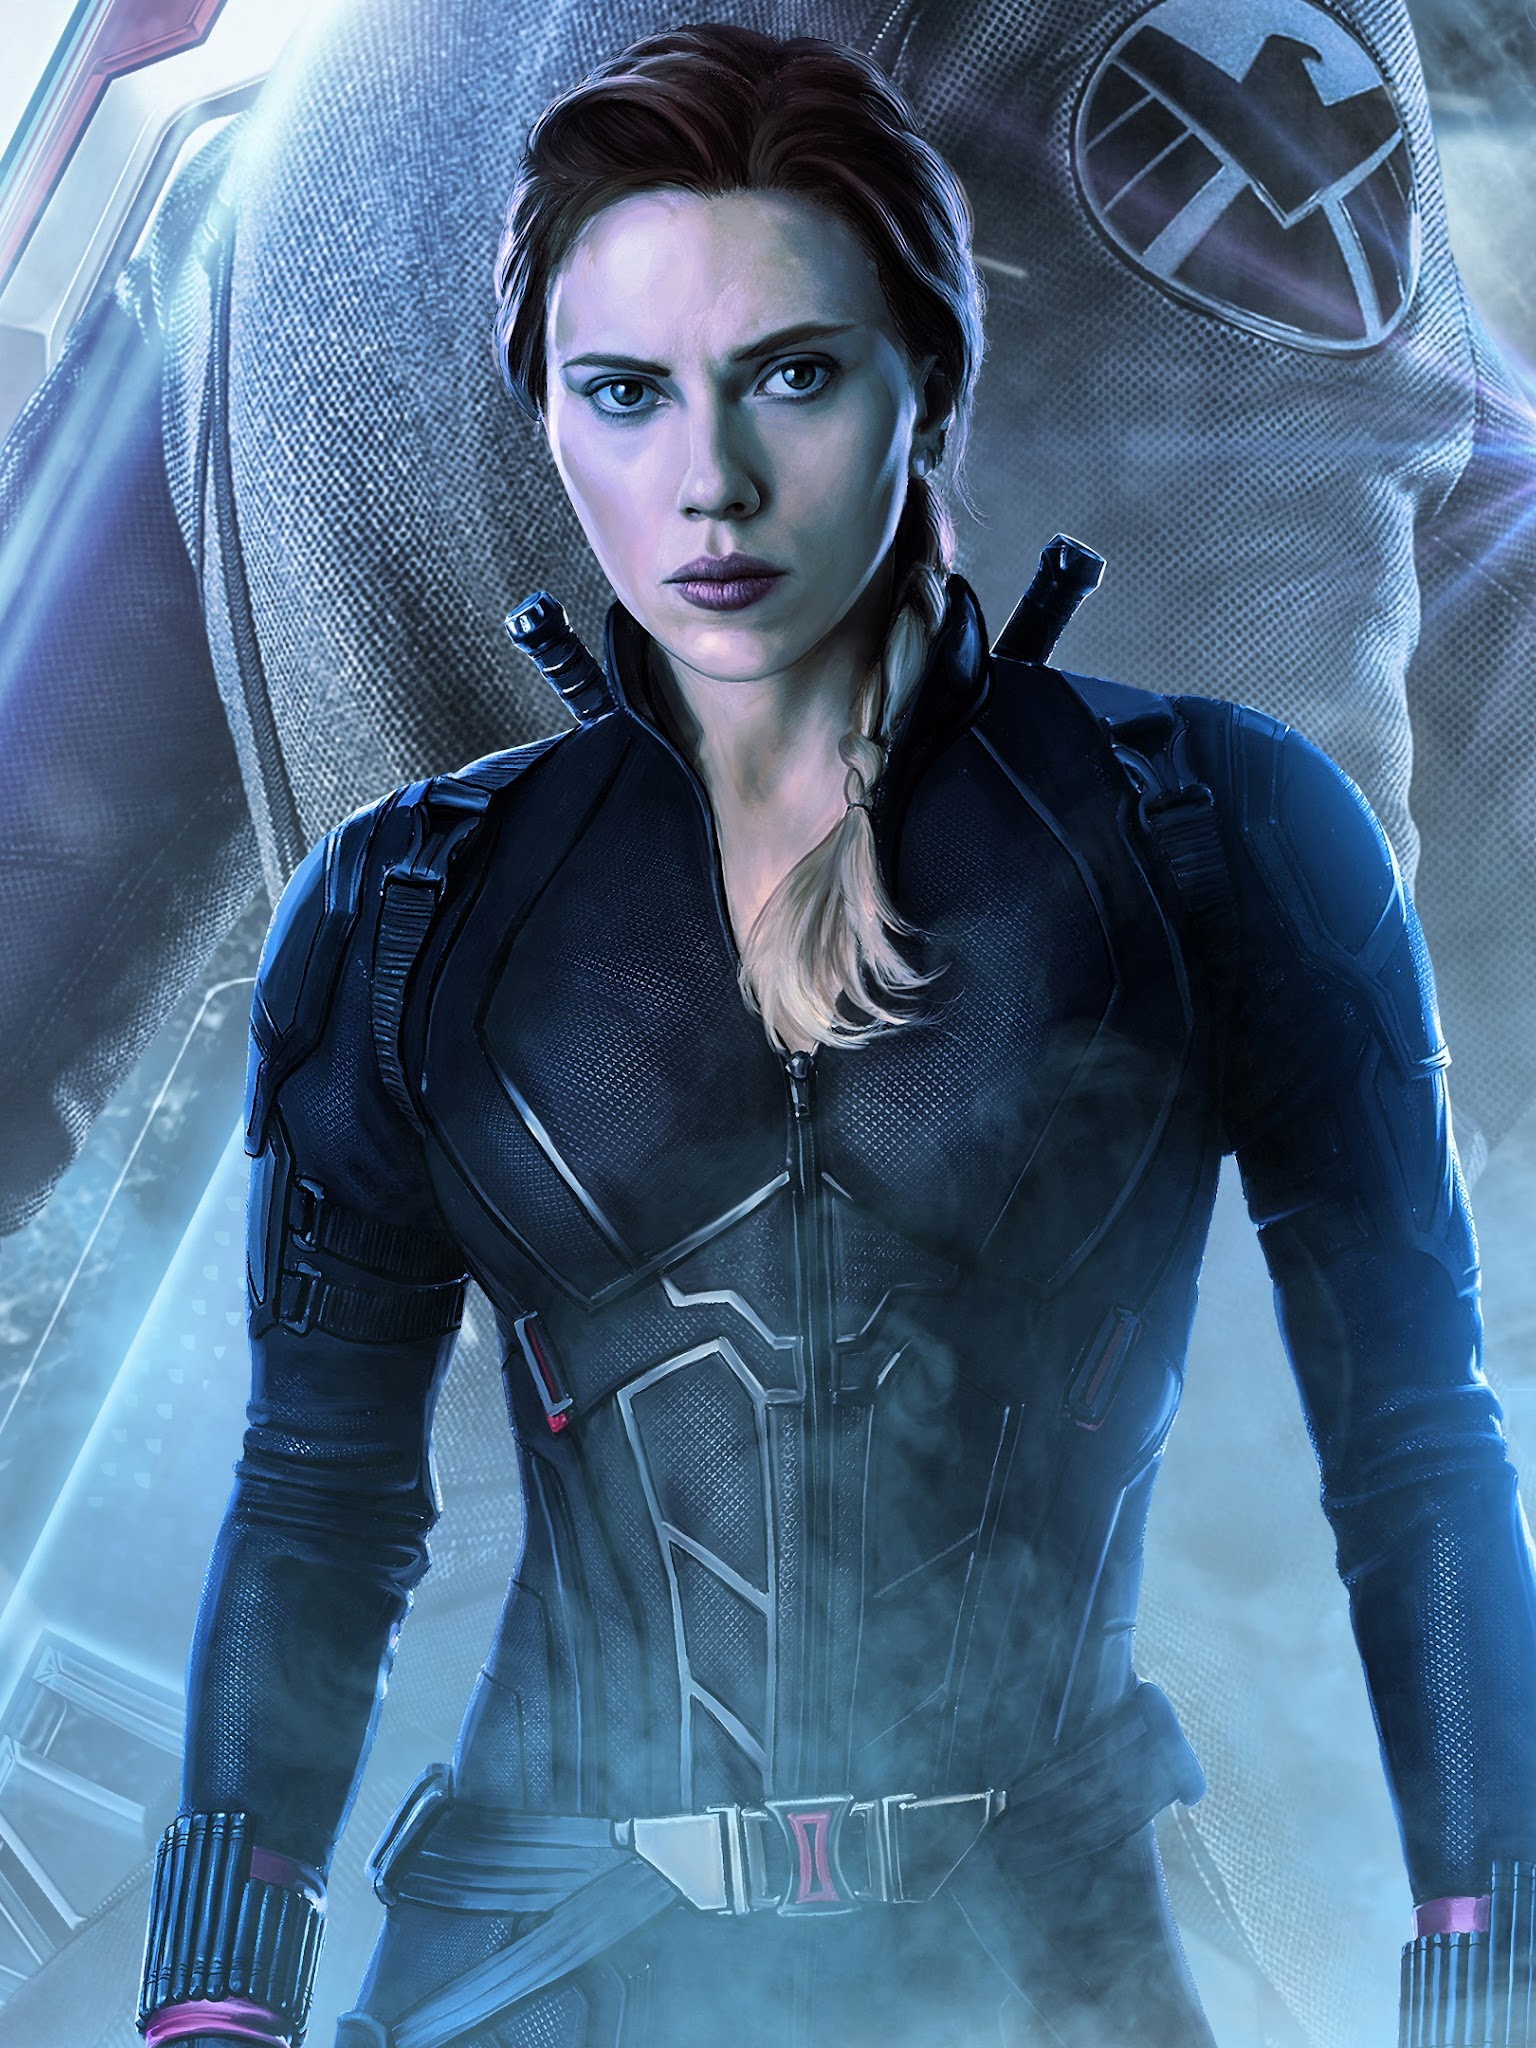 Avengers Endgame Black Widow, PC desktop wallpaper, 4K resolution, Free download, 1540x2050 HD Phone